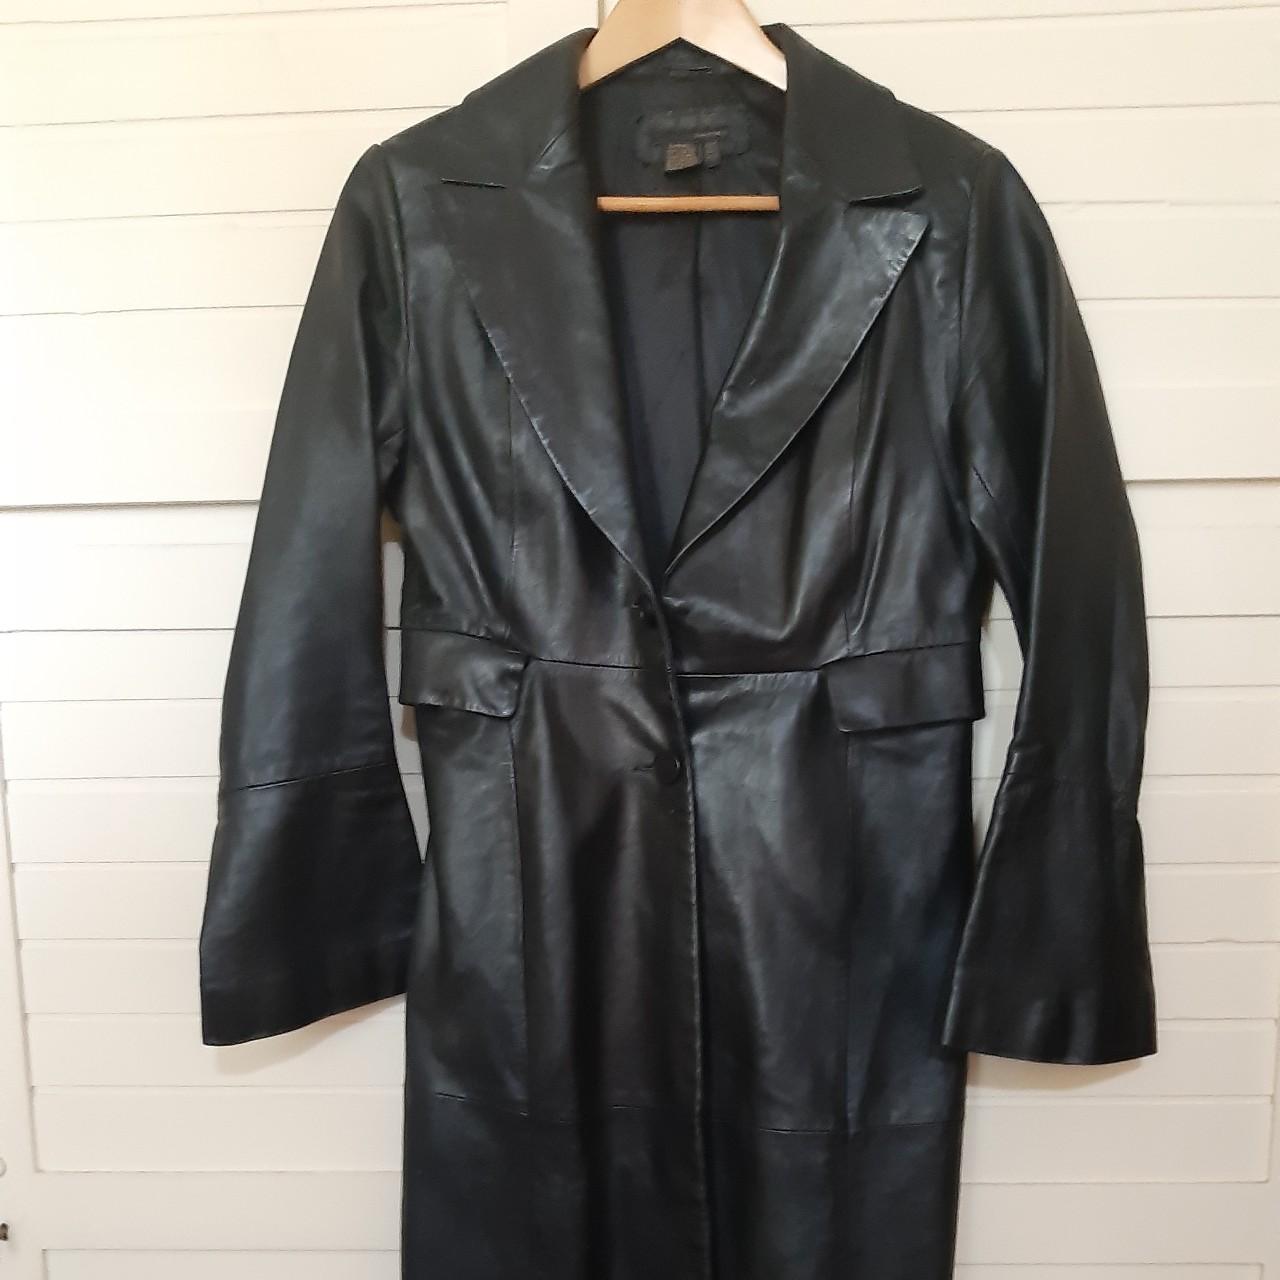 Zara leather trench coat jacket black medium... - Depop